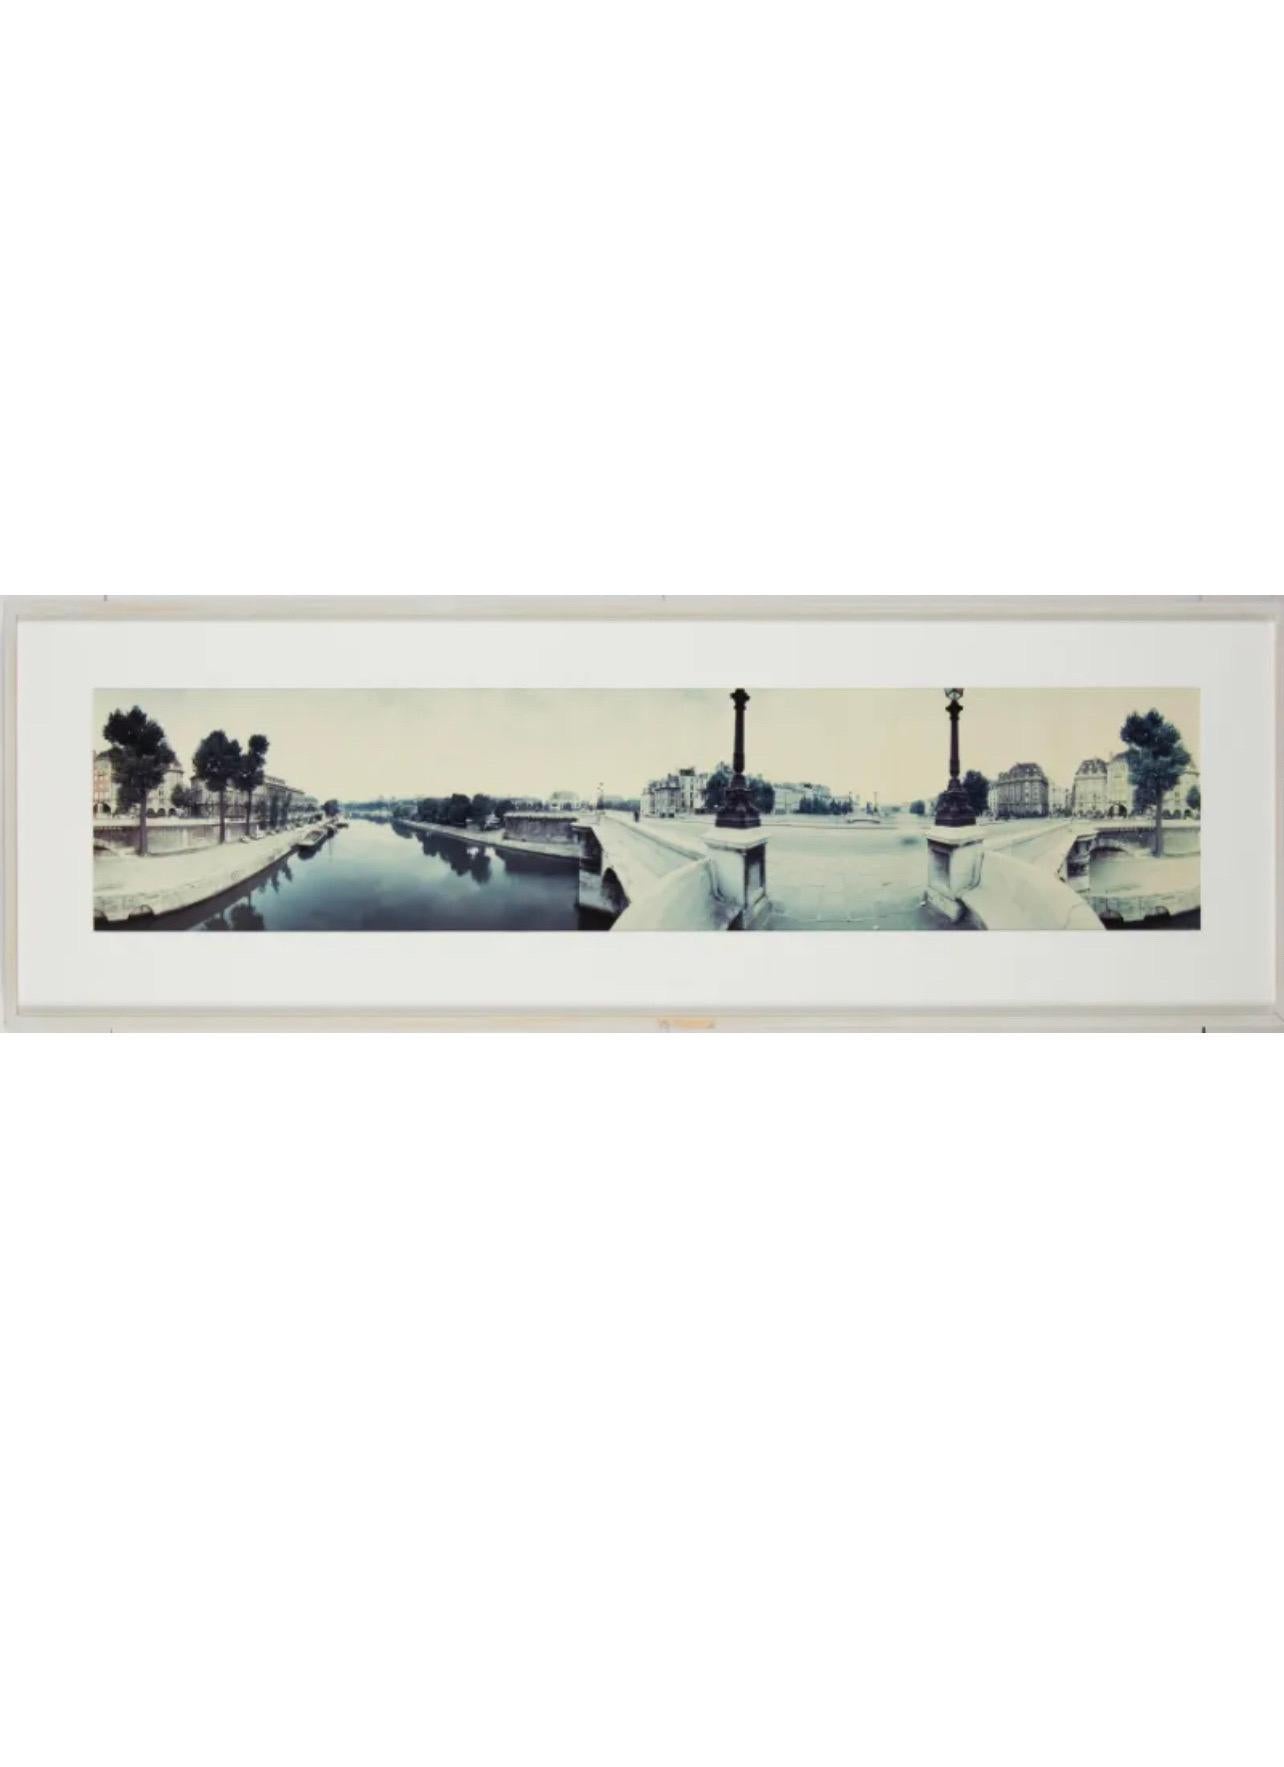 Kenneth Snelson Vintage C-Print Panoramic Photograph of Paris Chromogenic Photo 